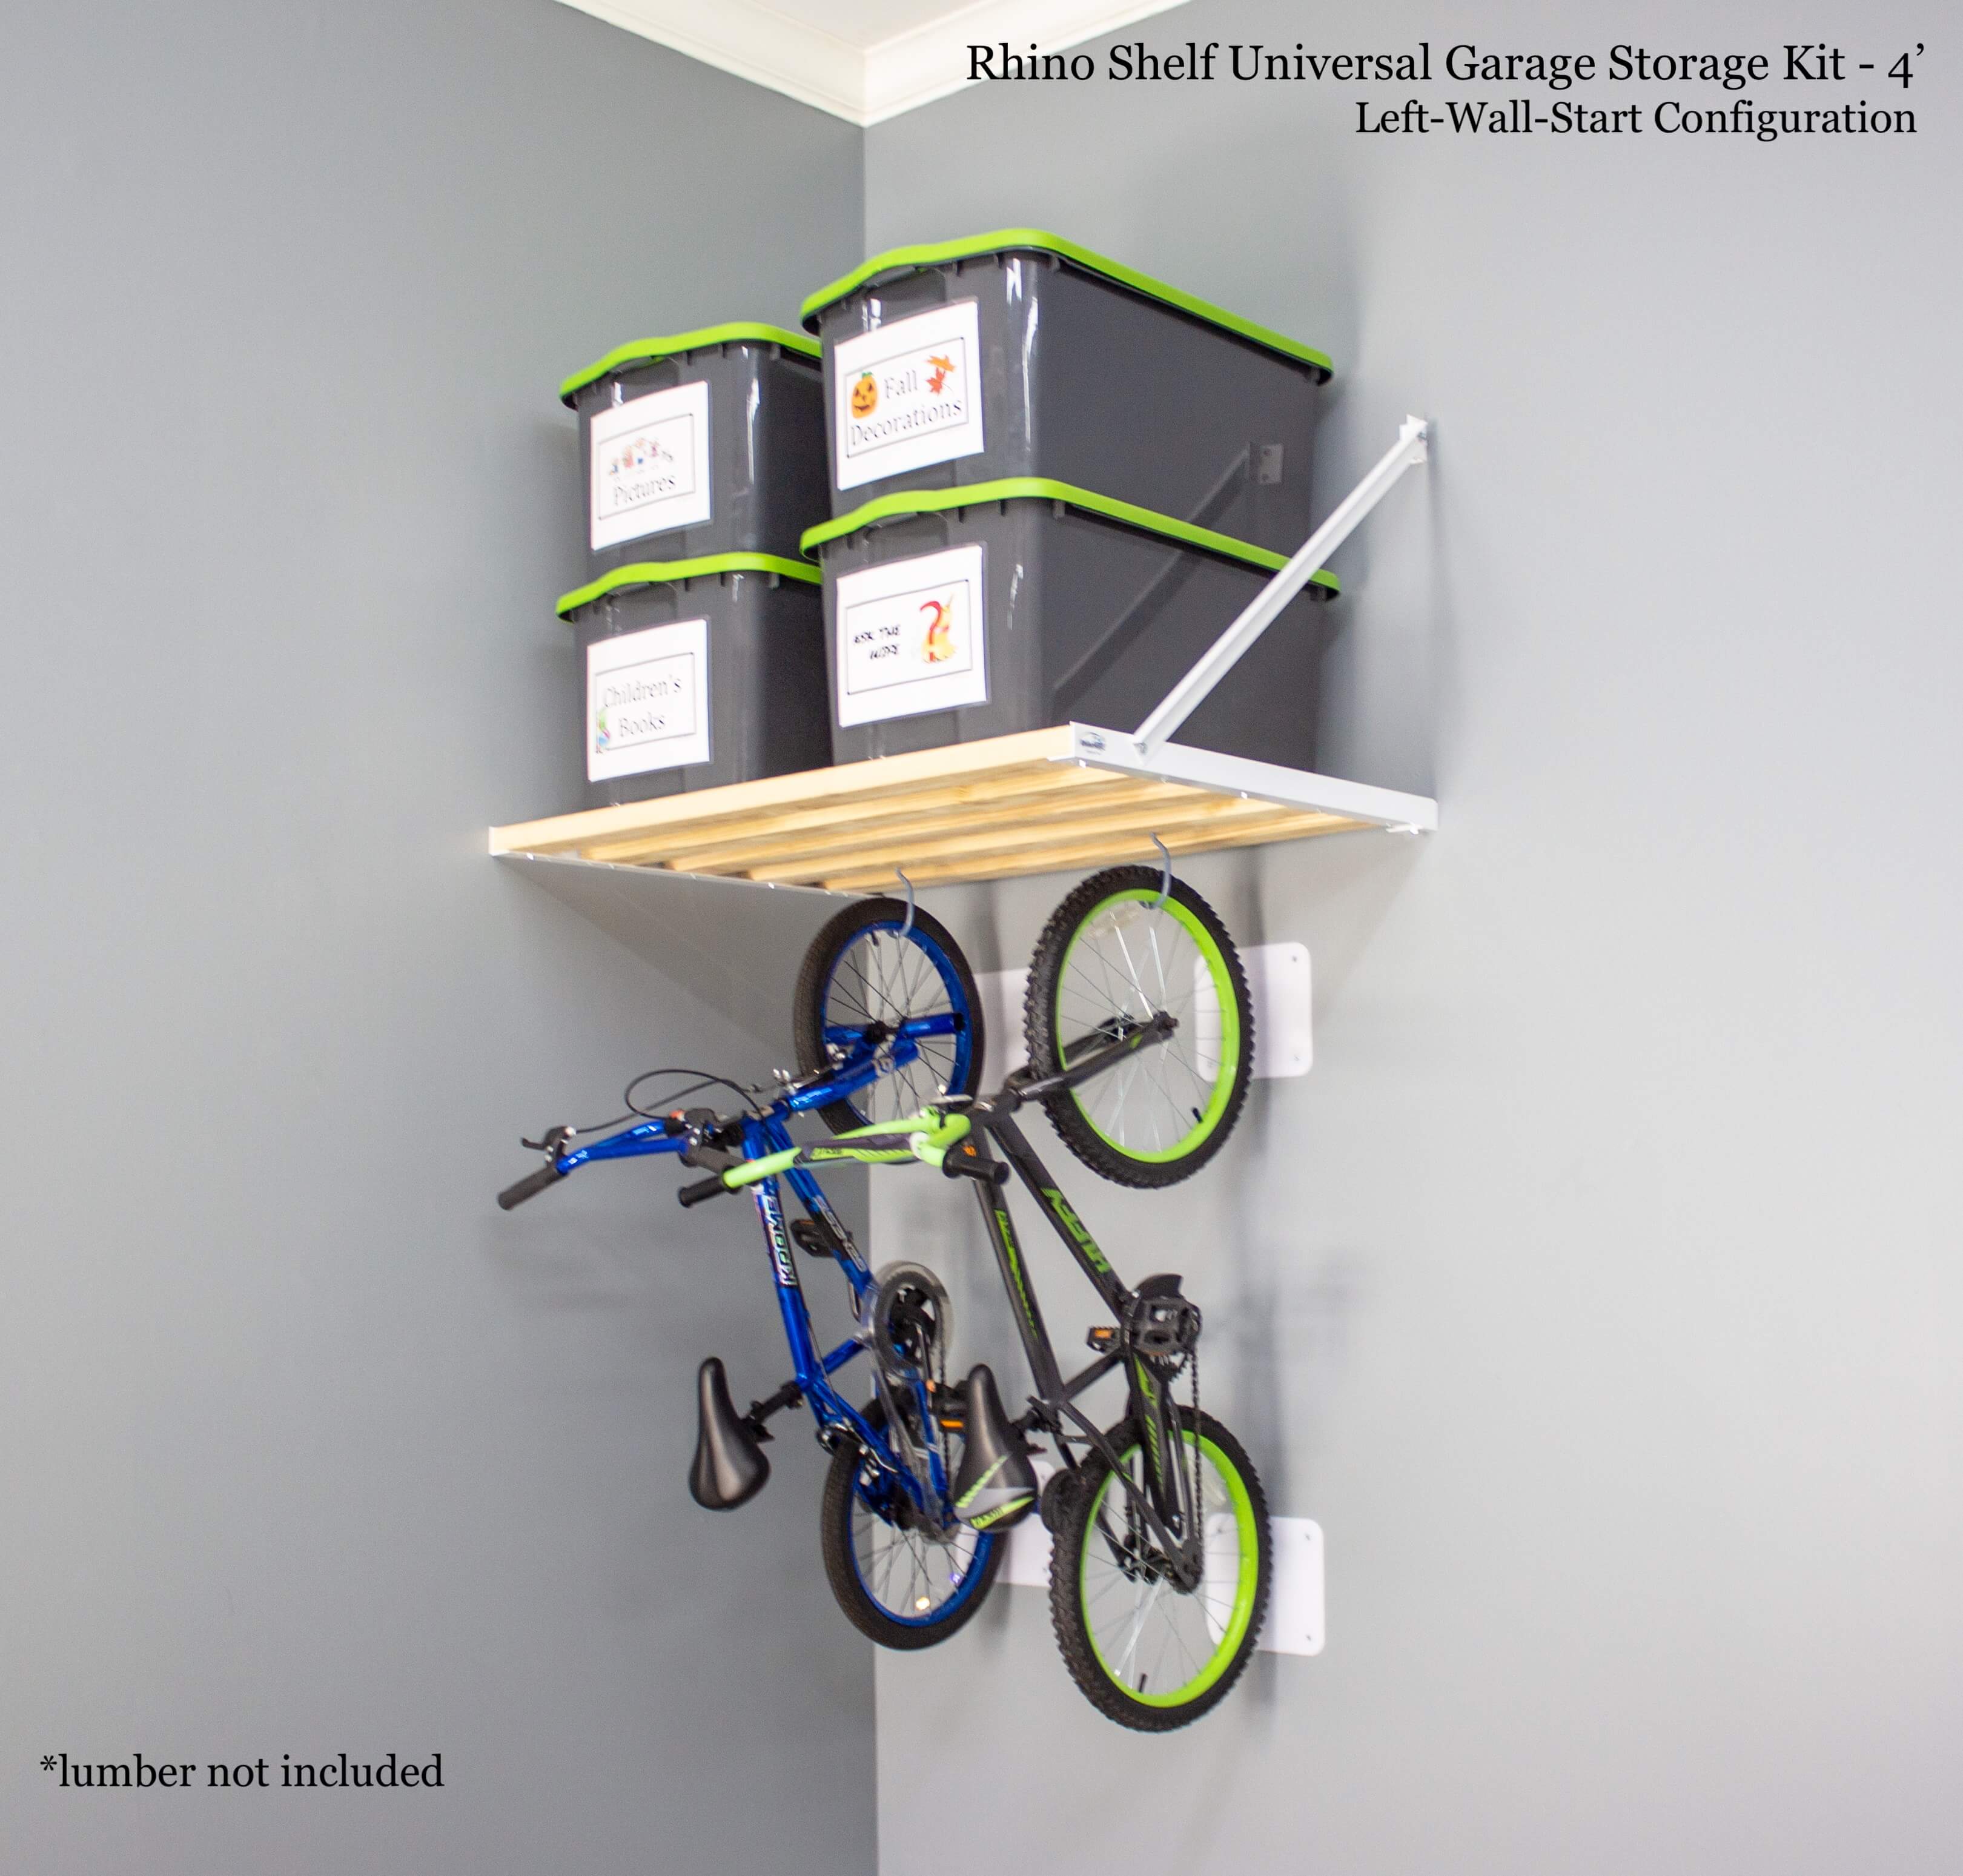 Rhino Shelf Universal Garage Storage Kit - 4 ft LWS